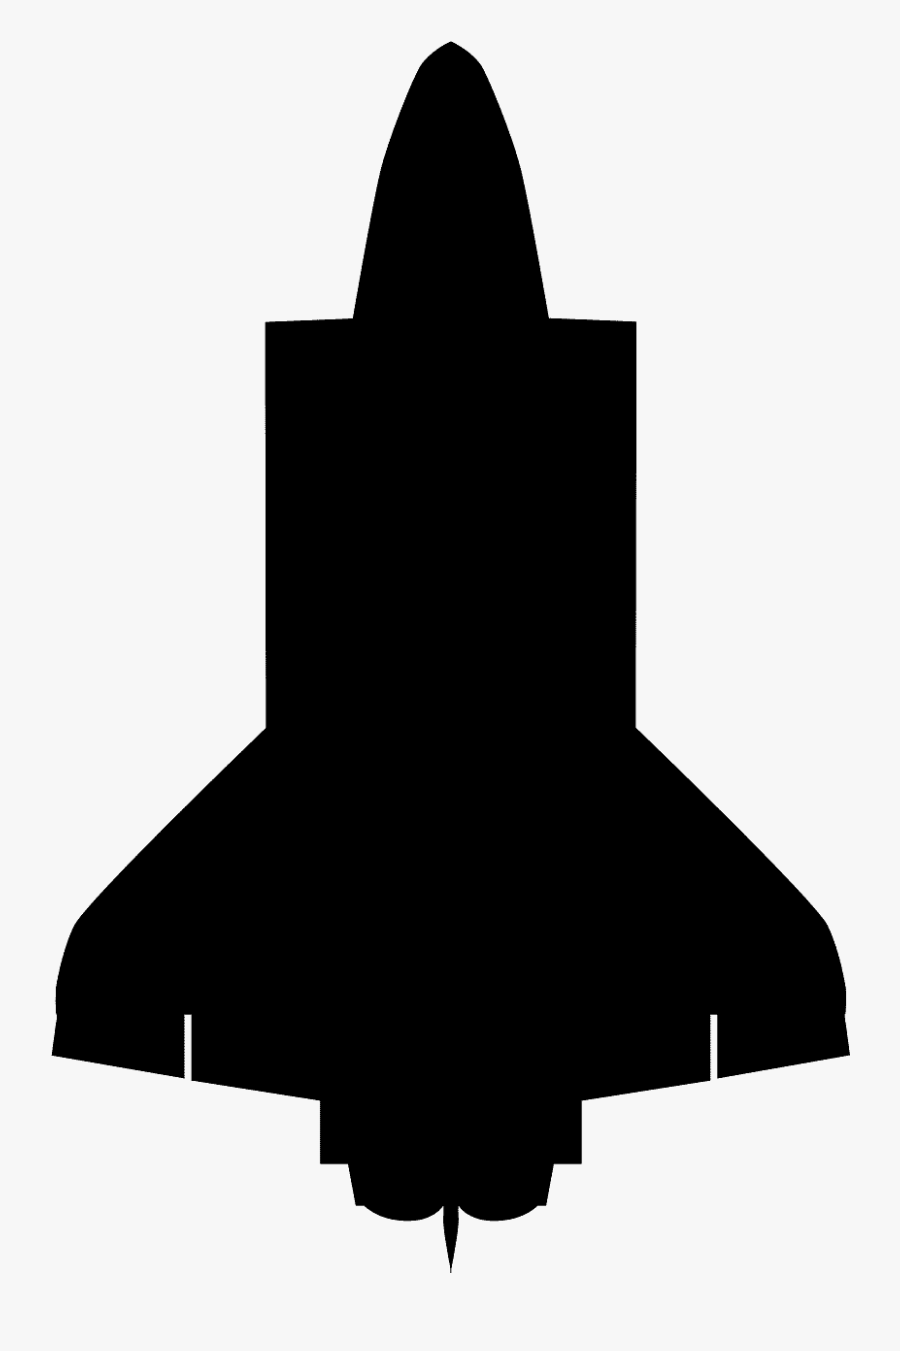 Space Clipart Silhouette - Space Shuttle Silhouette Vector, Transparent Clipart